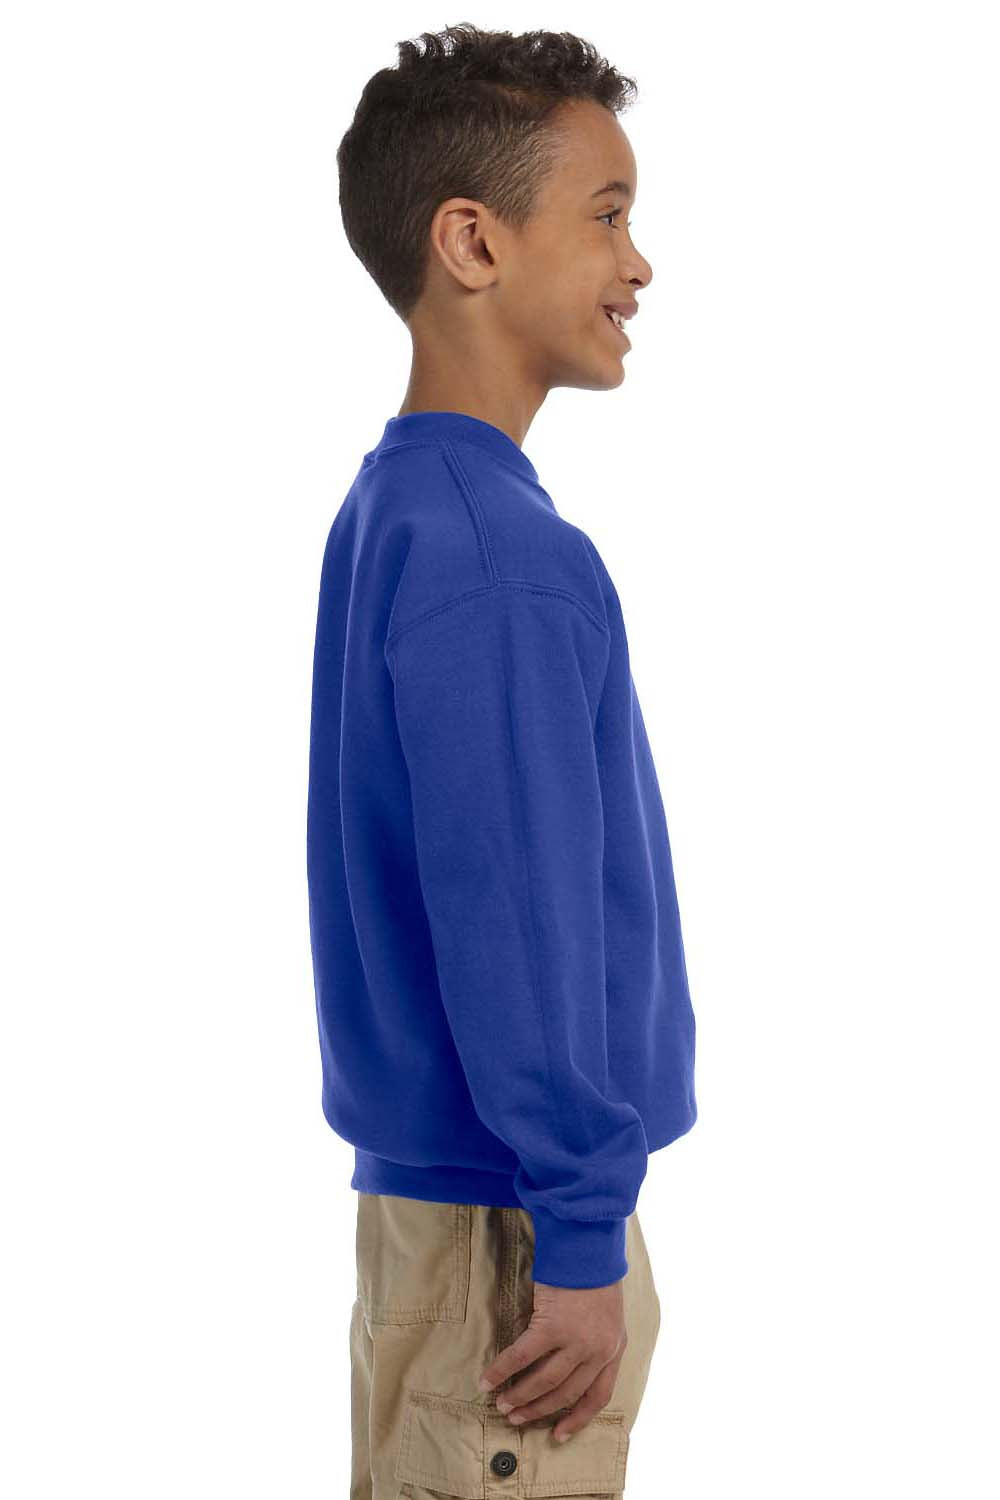 Gildan G180B Youth Fleece Crewneck Sweatshirt Royal Blue Side